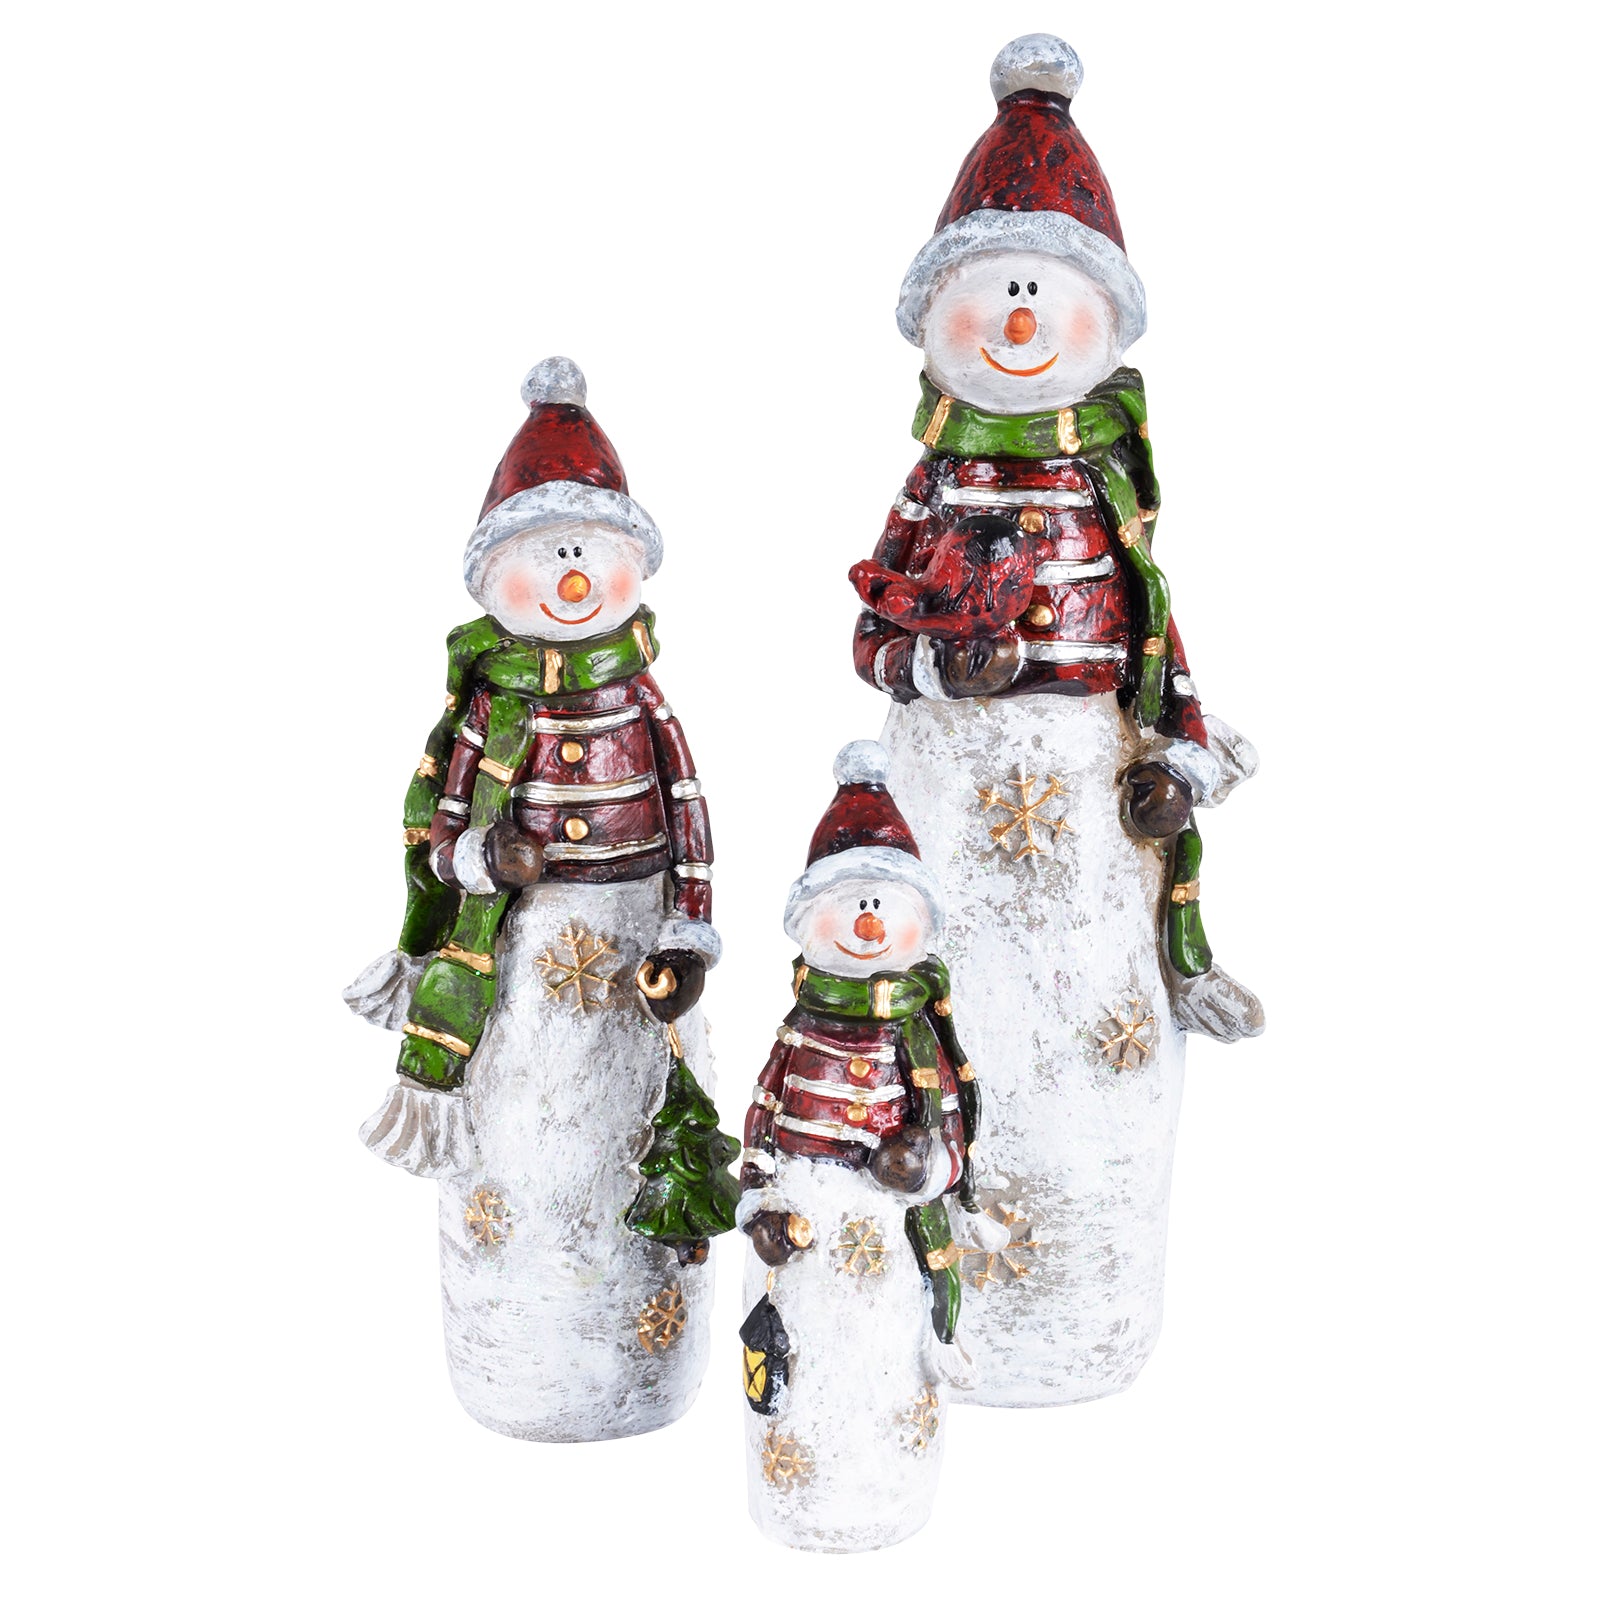 Mr Crimbo Snowman Ornament Resin Christmas Decoration - MrCrimbo.co.uk -XS4306 - 12cm -christmas decoration